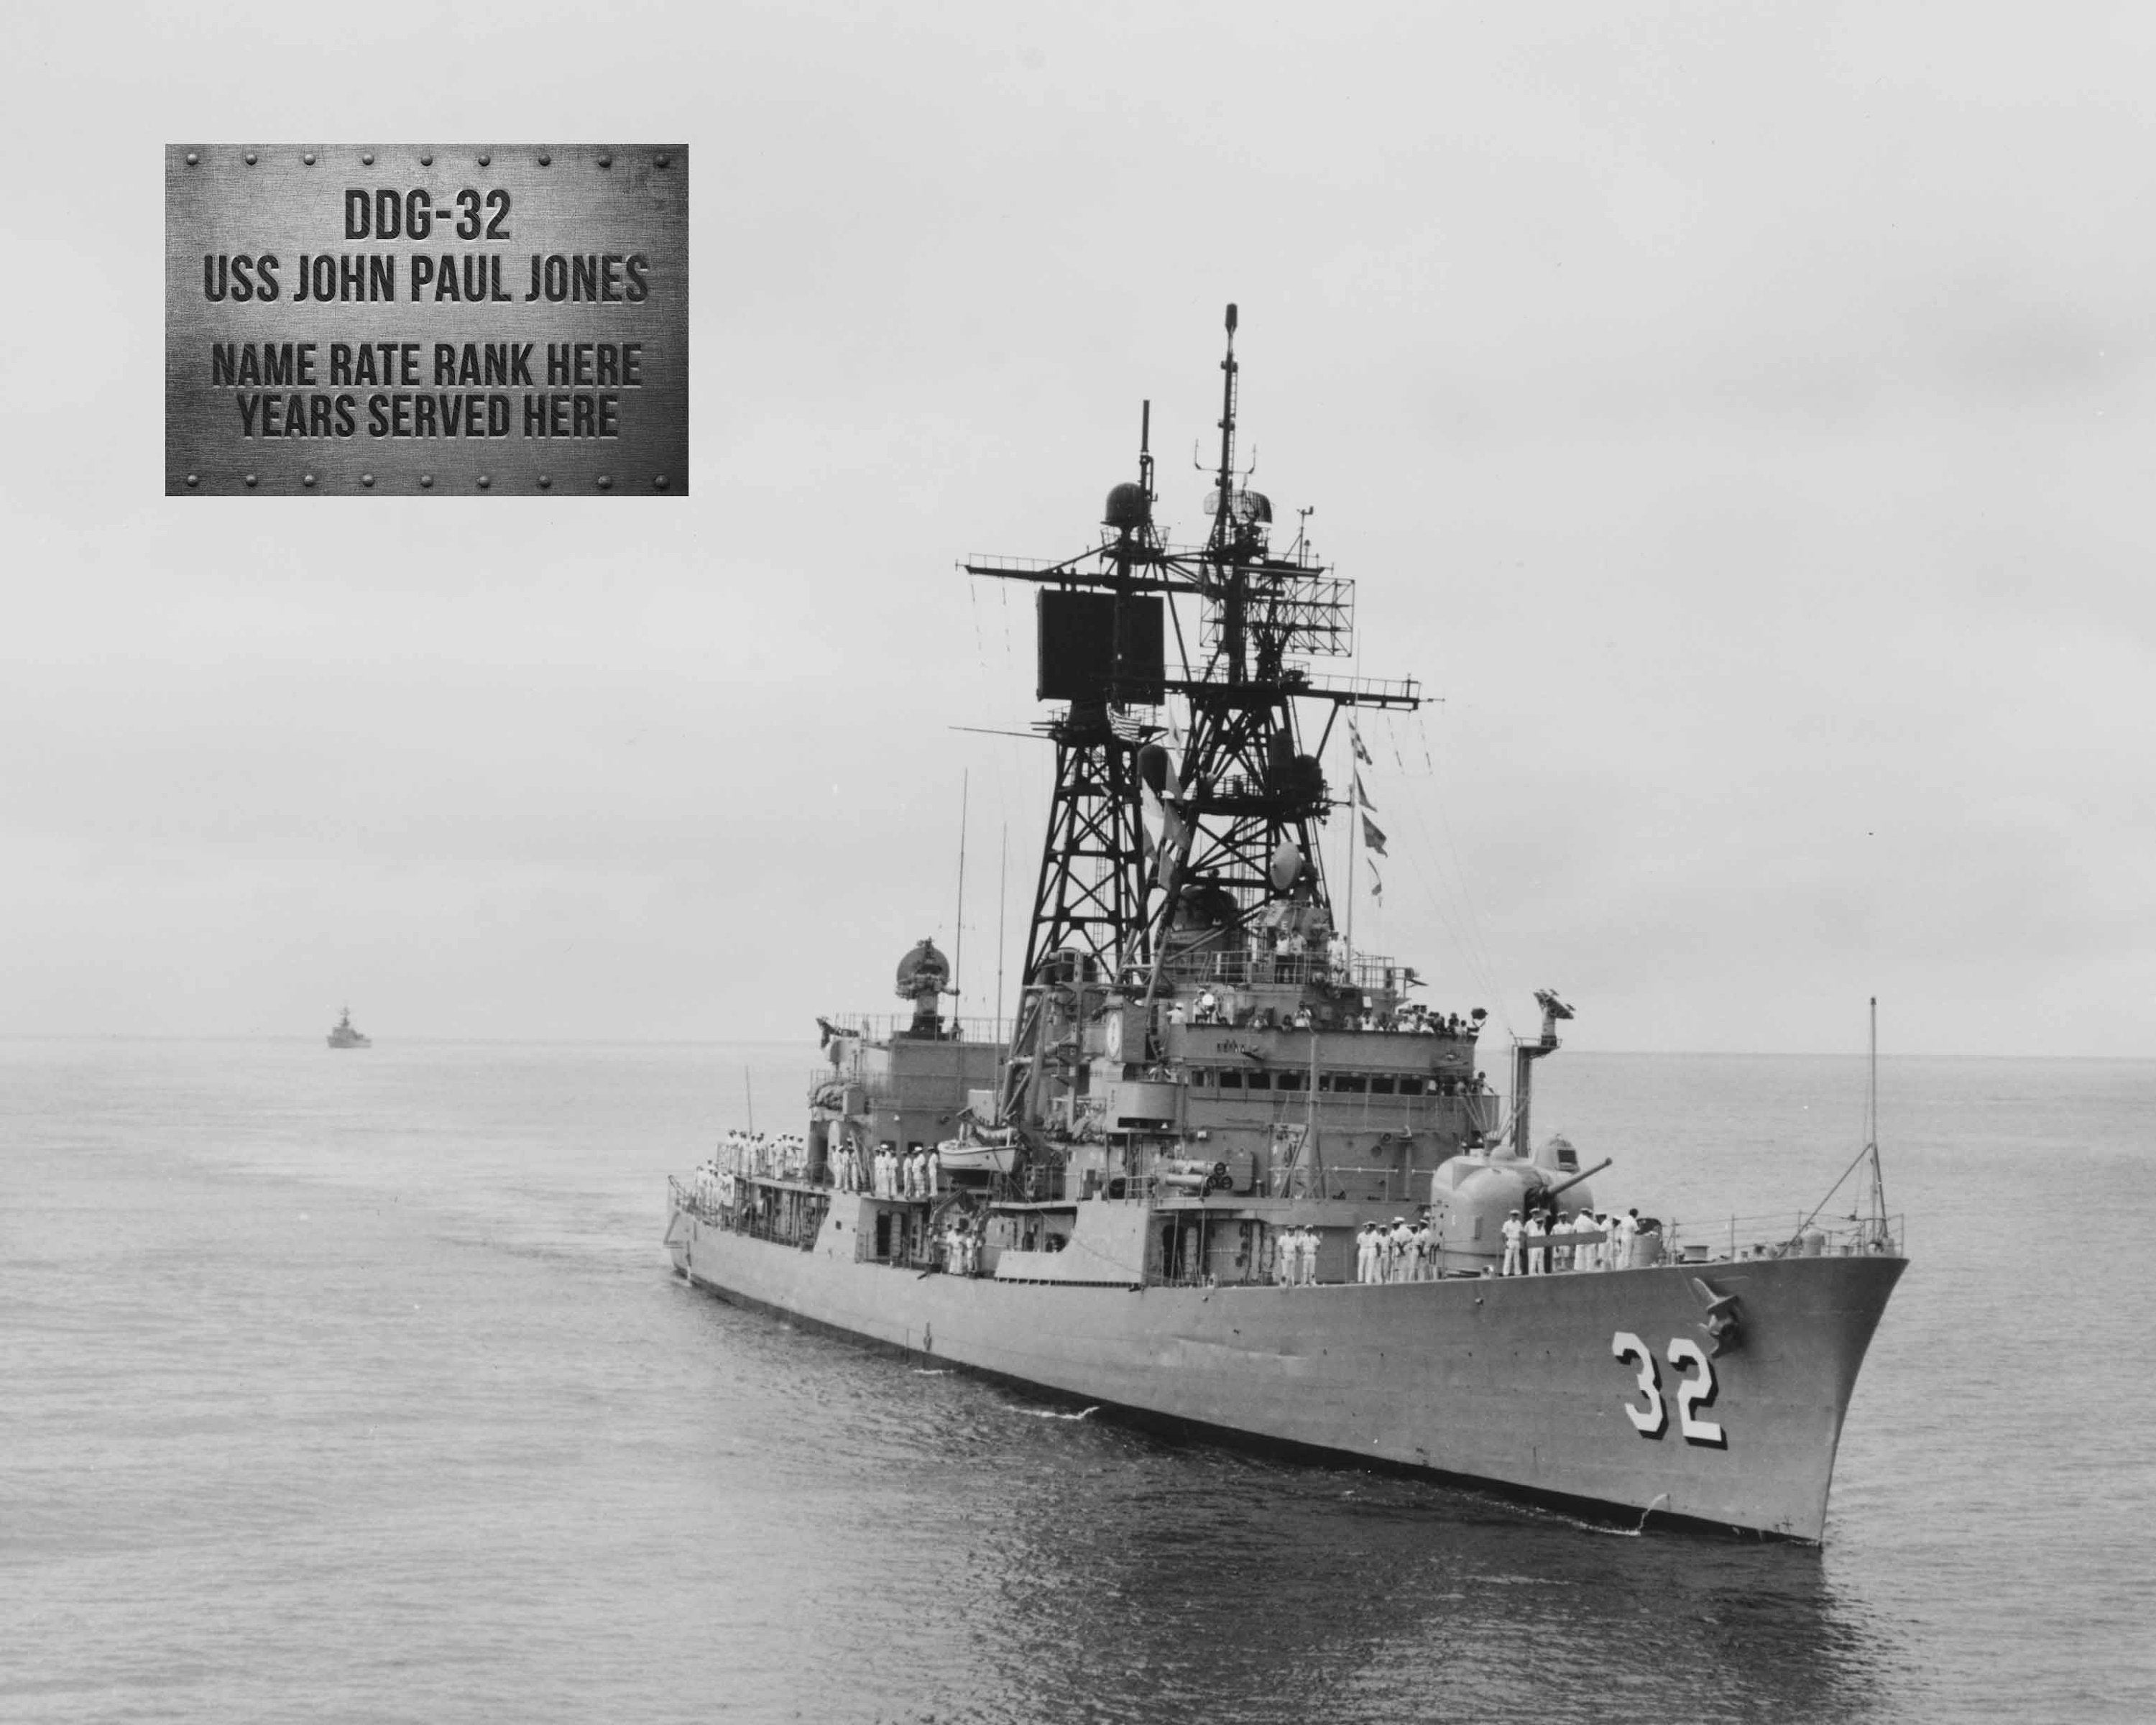 U.S NAVY SHIP HAT PATCH USS JOHN PAUL JONES DDG-53 SHIP PATCH HEAT TRANSFER